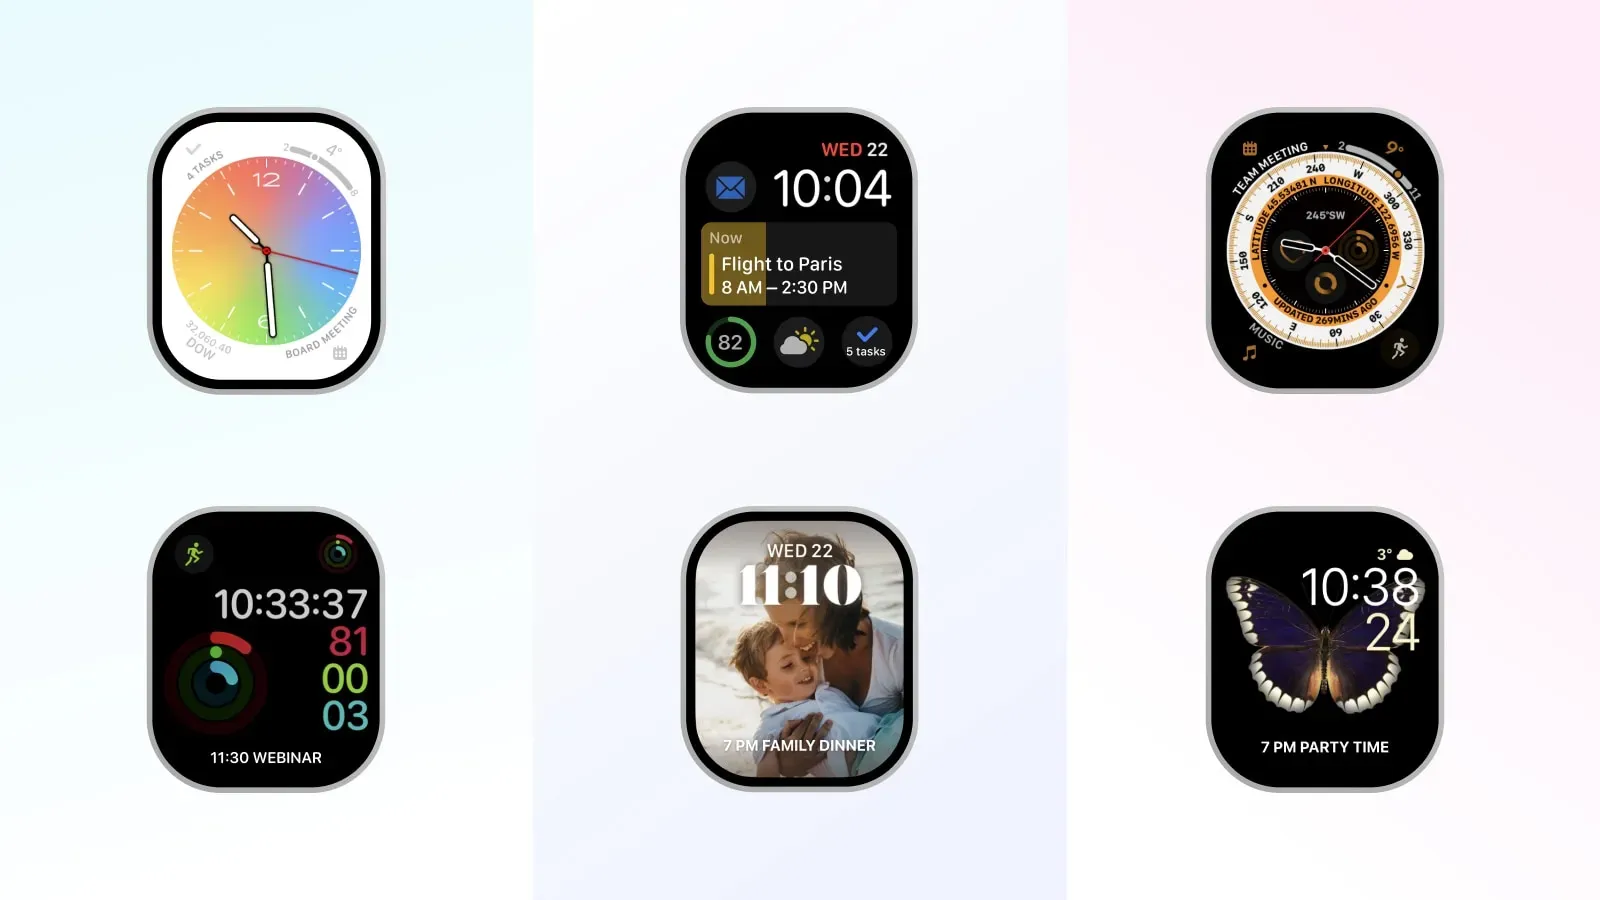 Panoramica visiva di sei nuovi quadranti di Apple Watch in Readdle Calendars